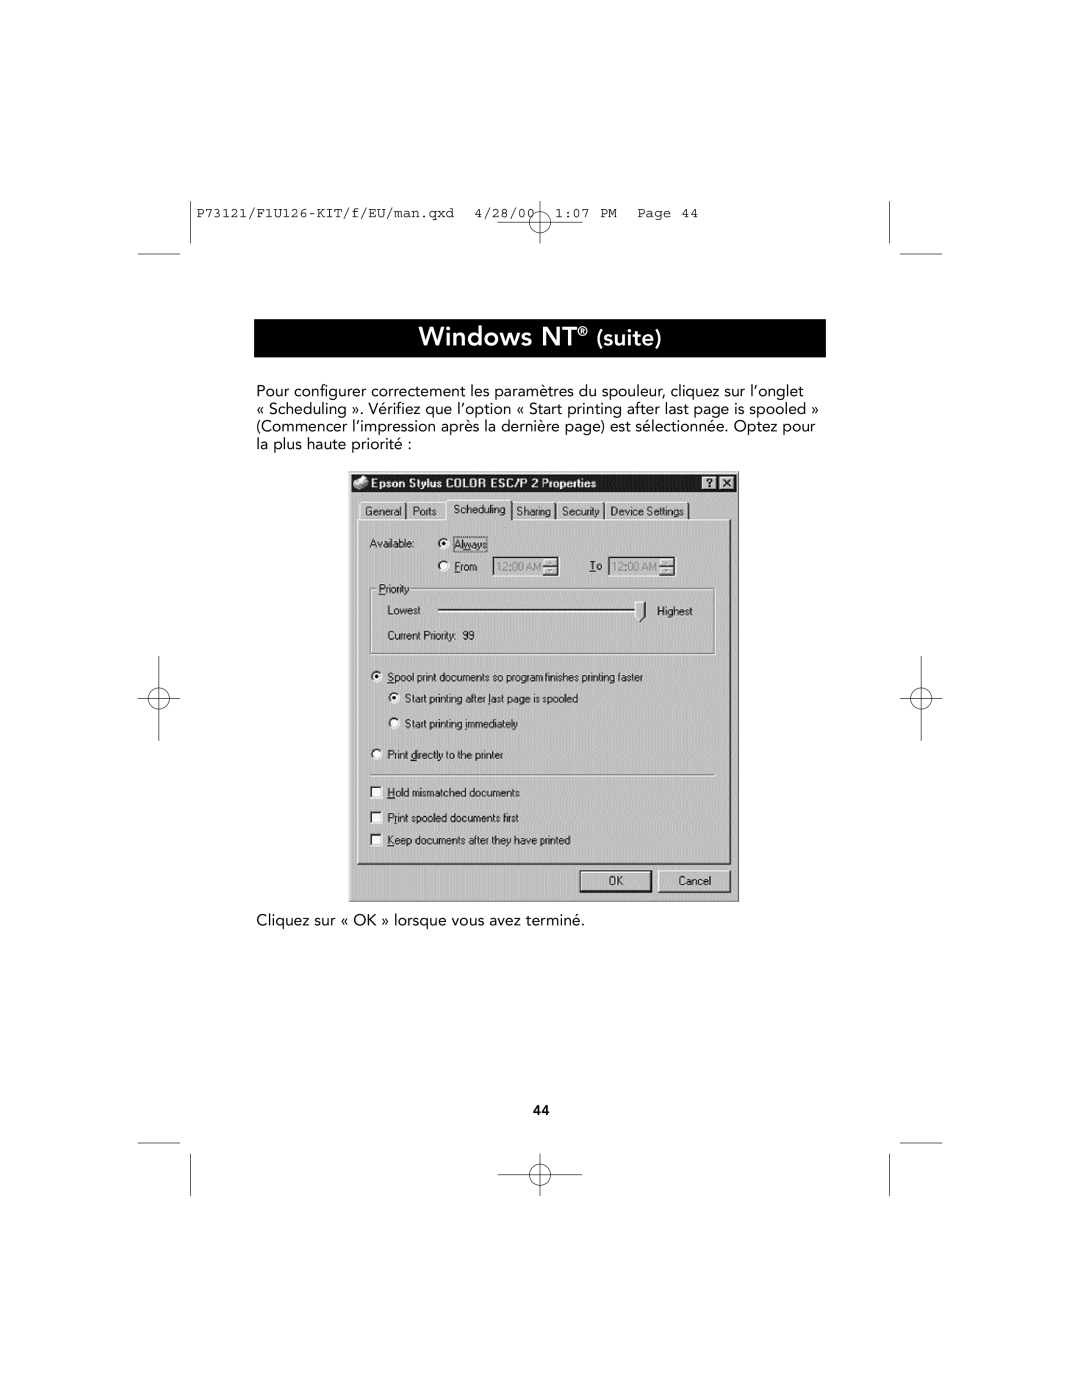 Belkin P73121, F1U126-KIT user manual Windows NT suite 